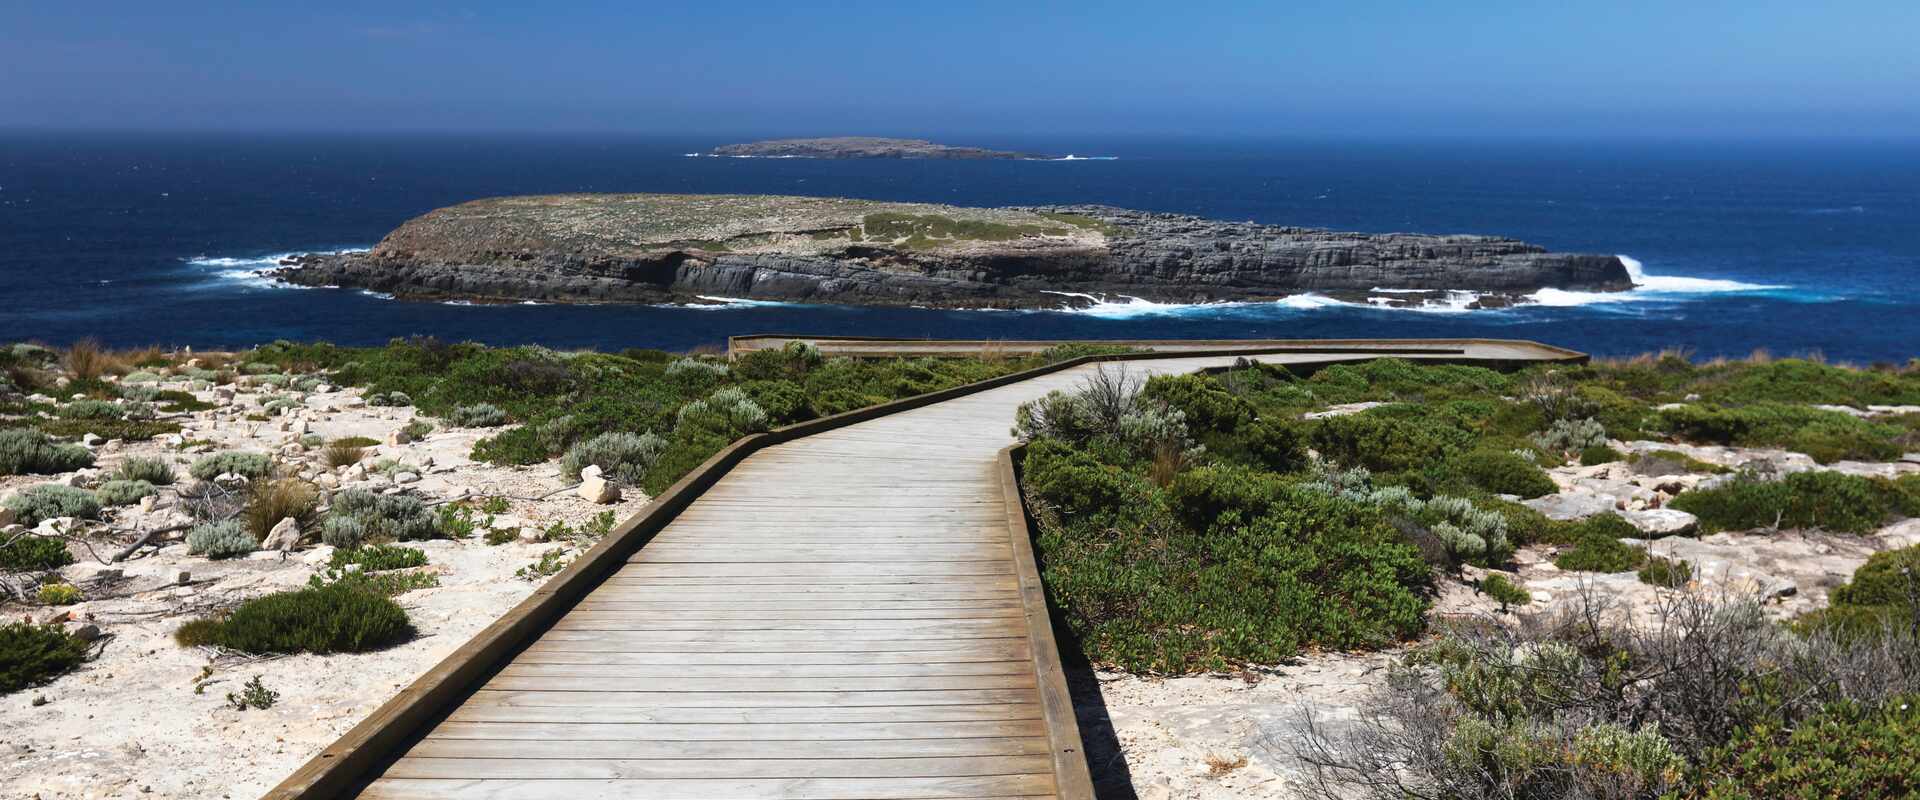 Kangaroo Island boardwalk, South Australia